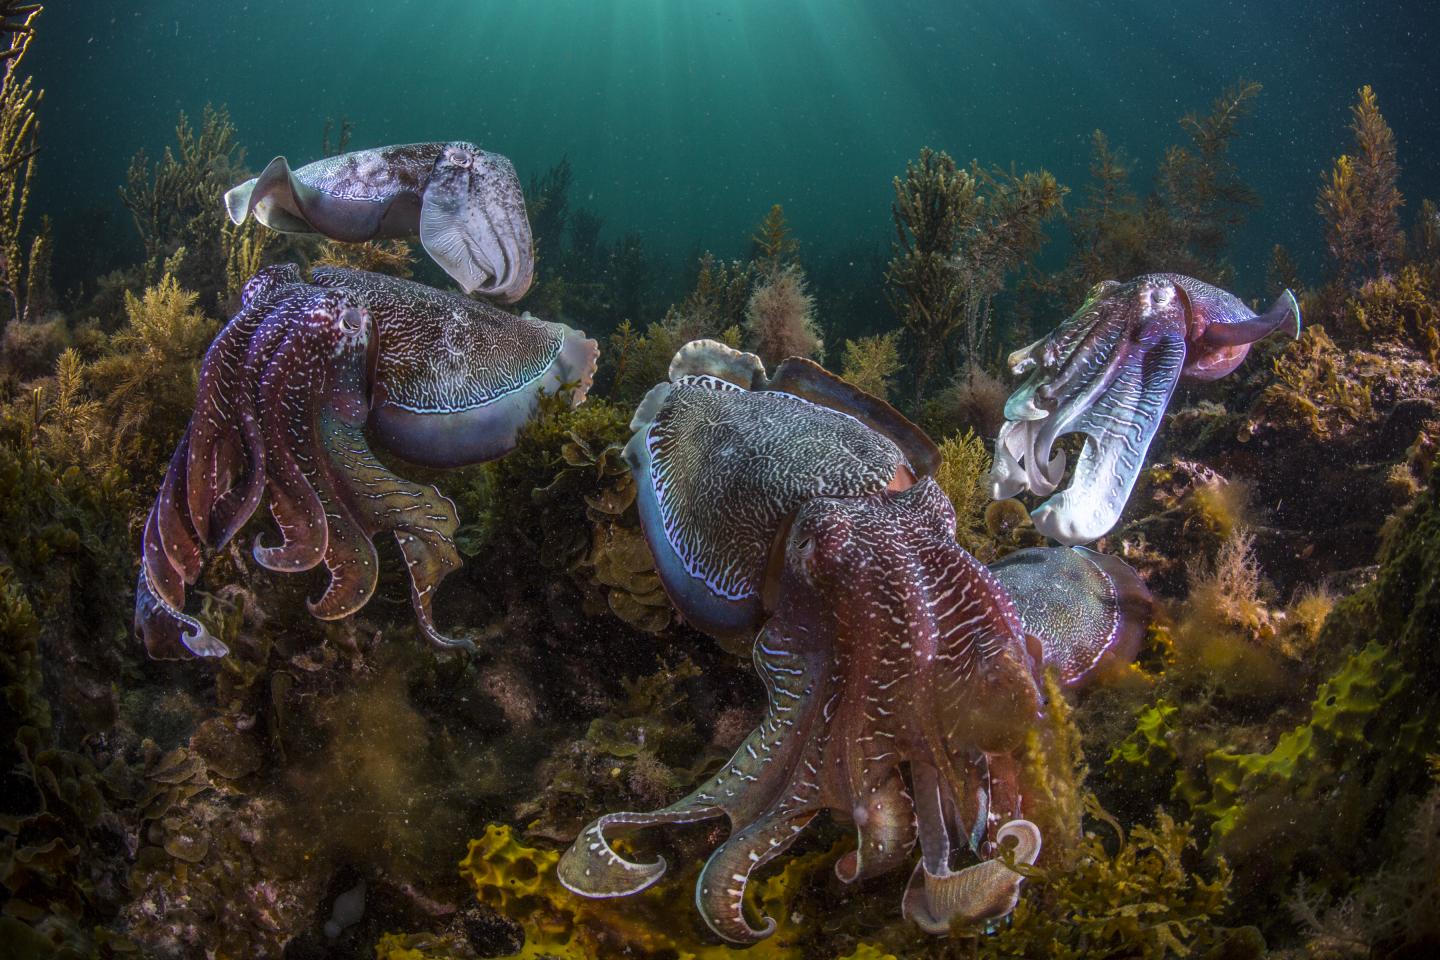 Giant Australian Cuttlefish (1 of 2)